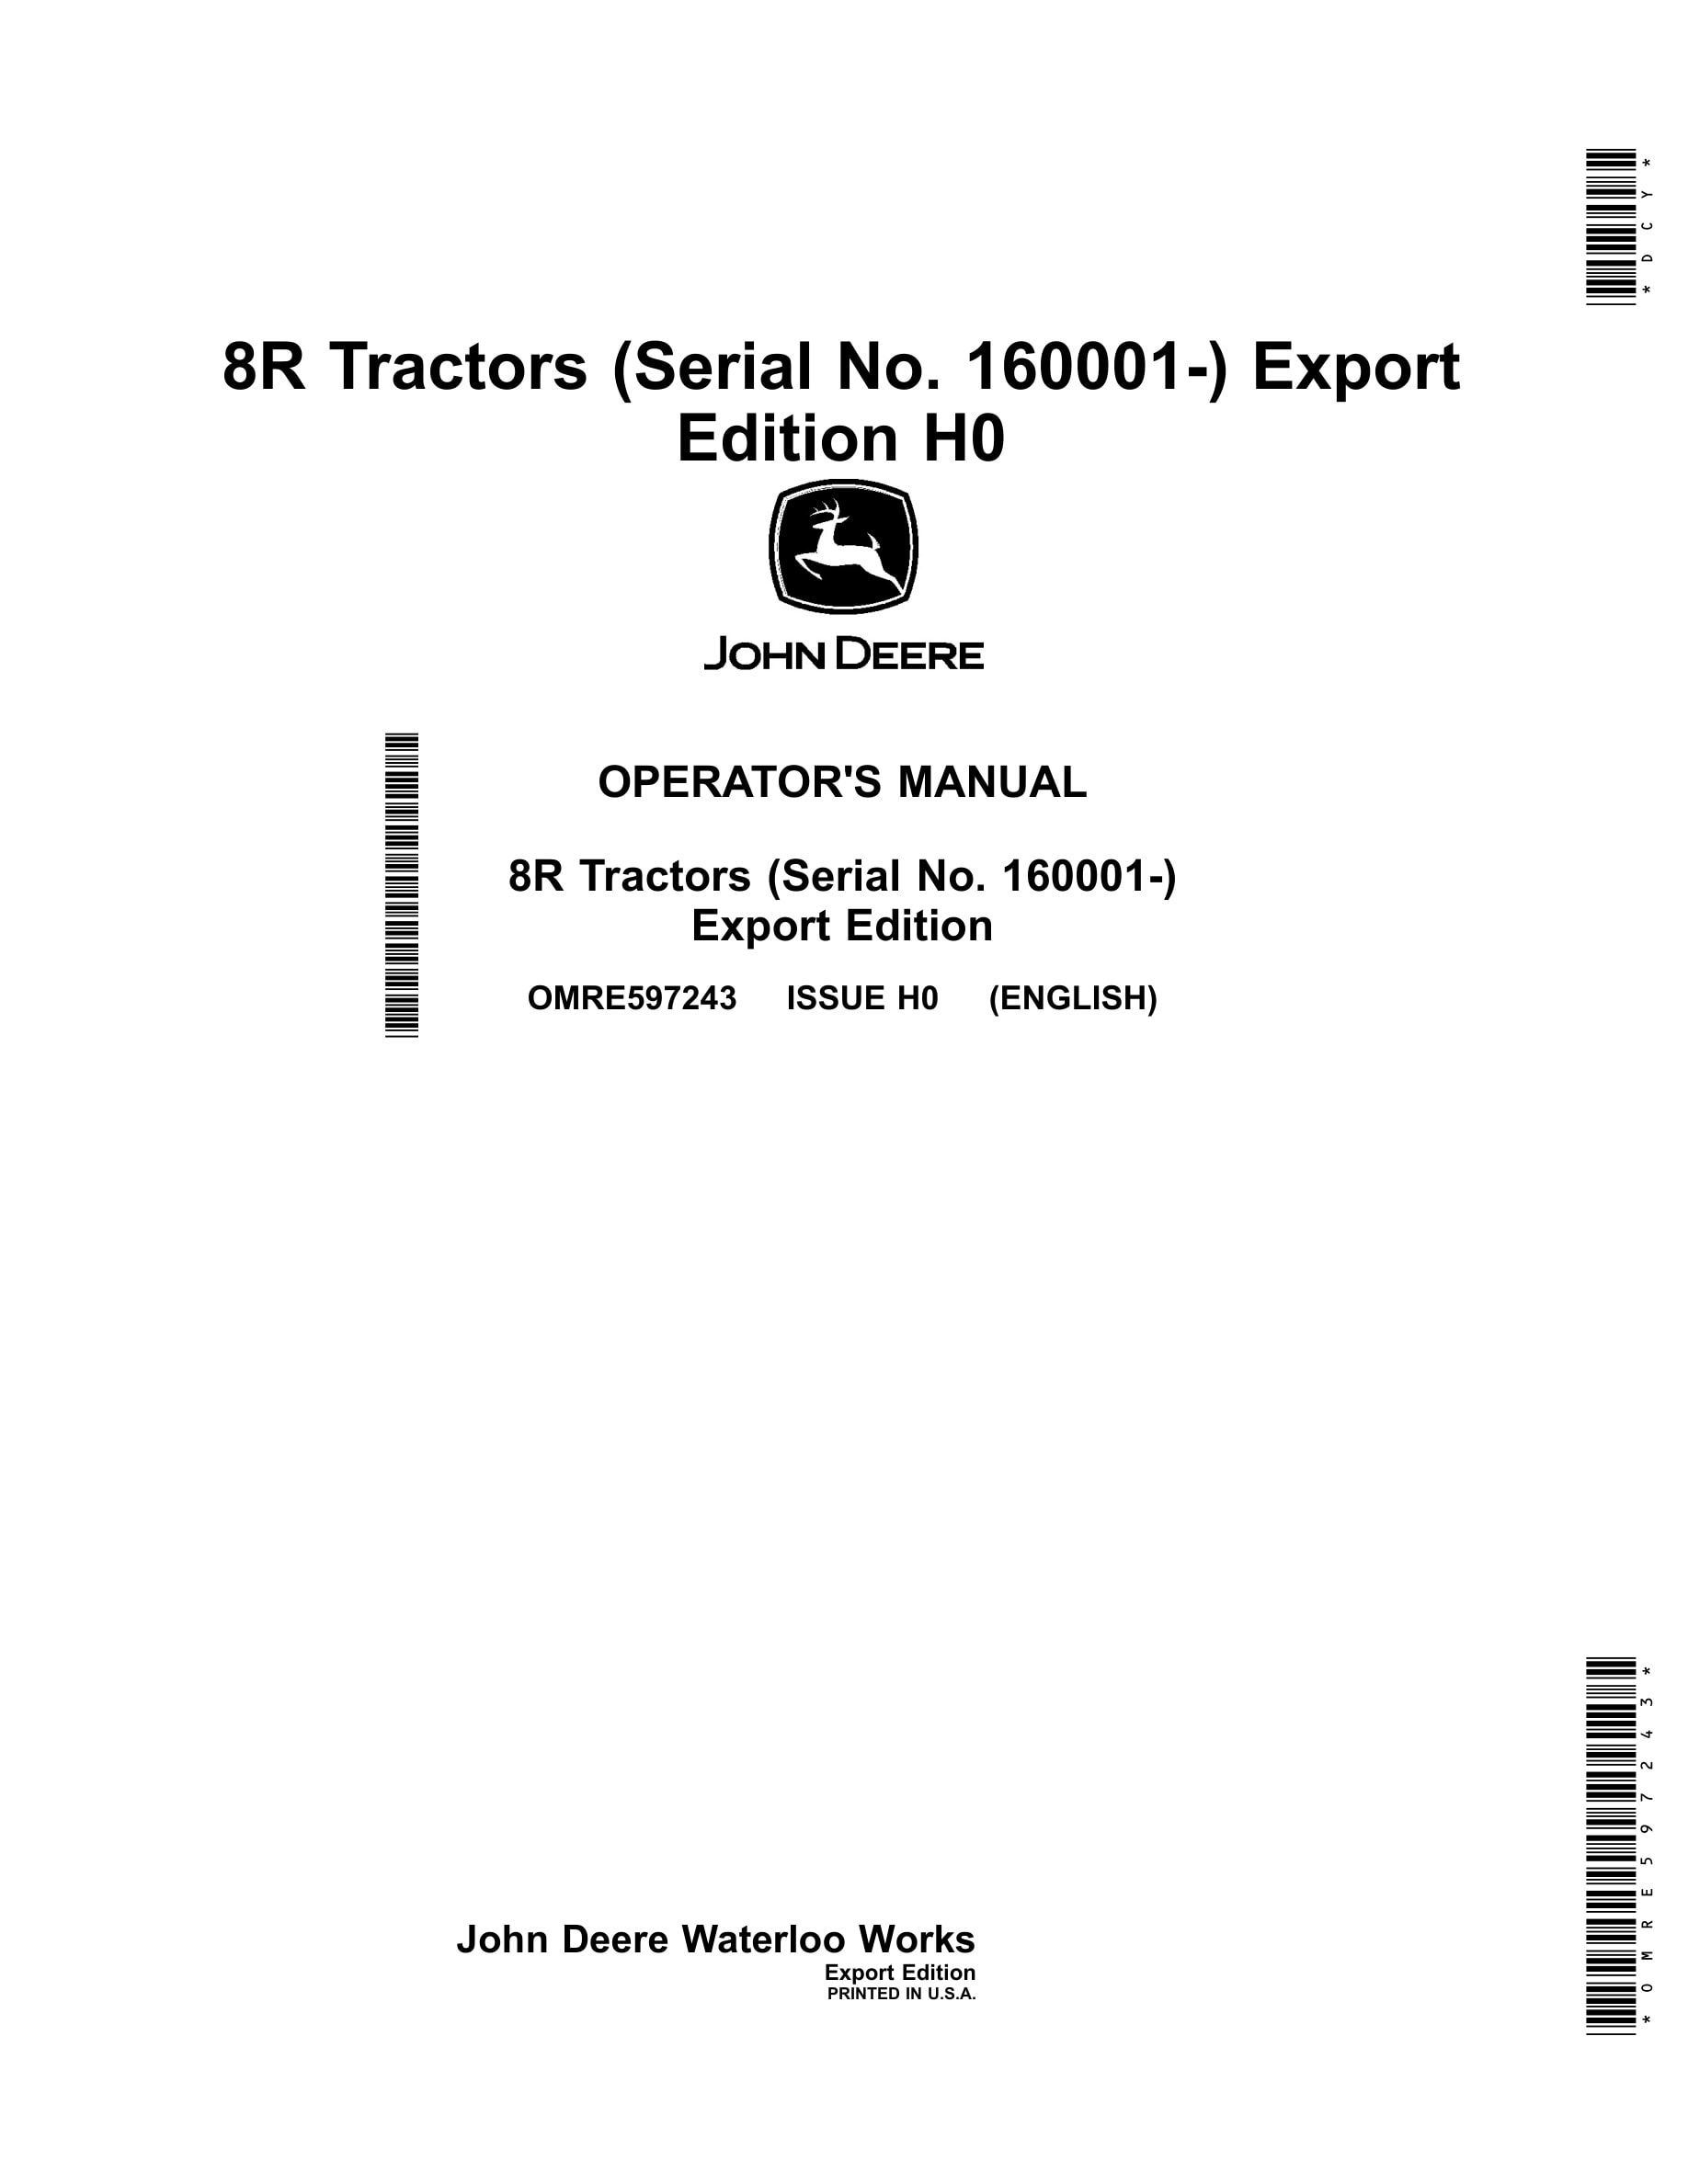 John Deere 8r Tractors Operator Manuals OMRE597243-1